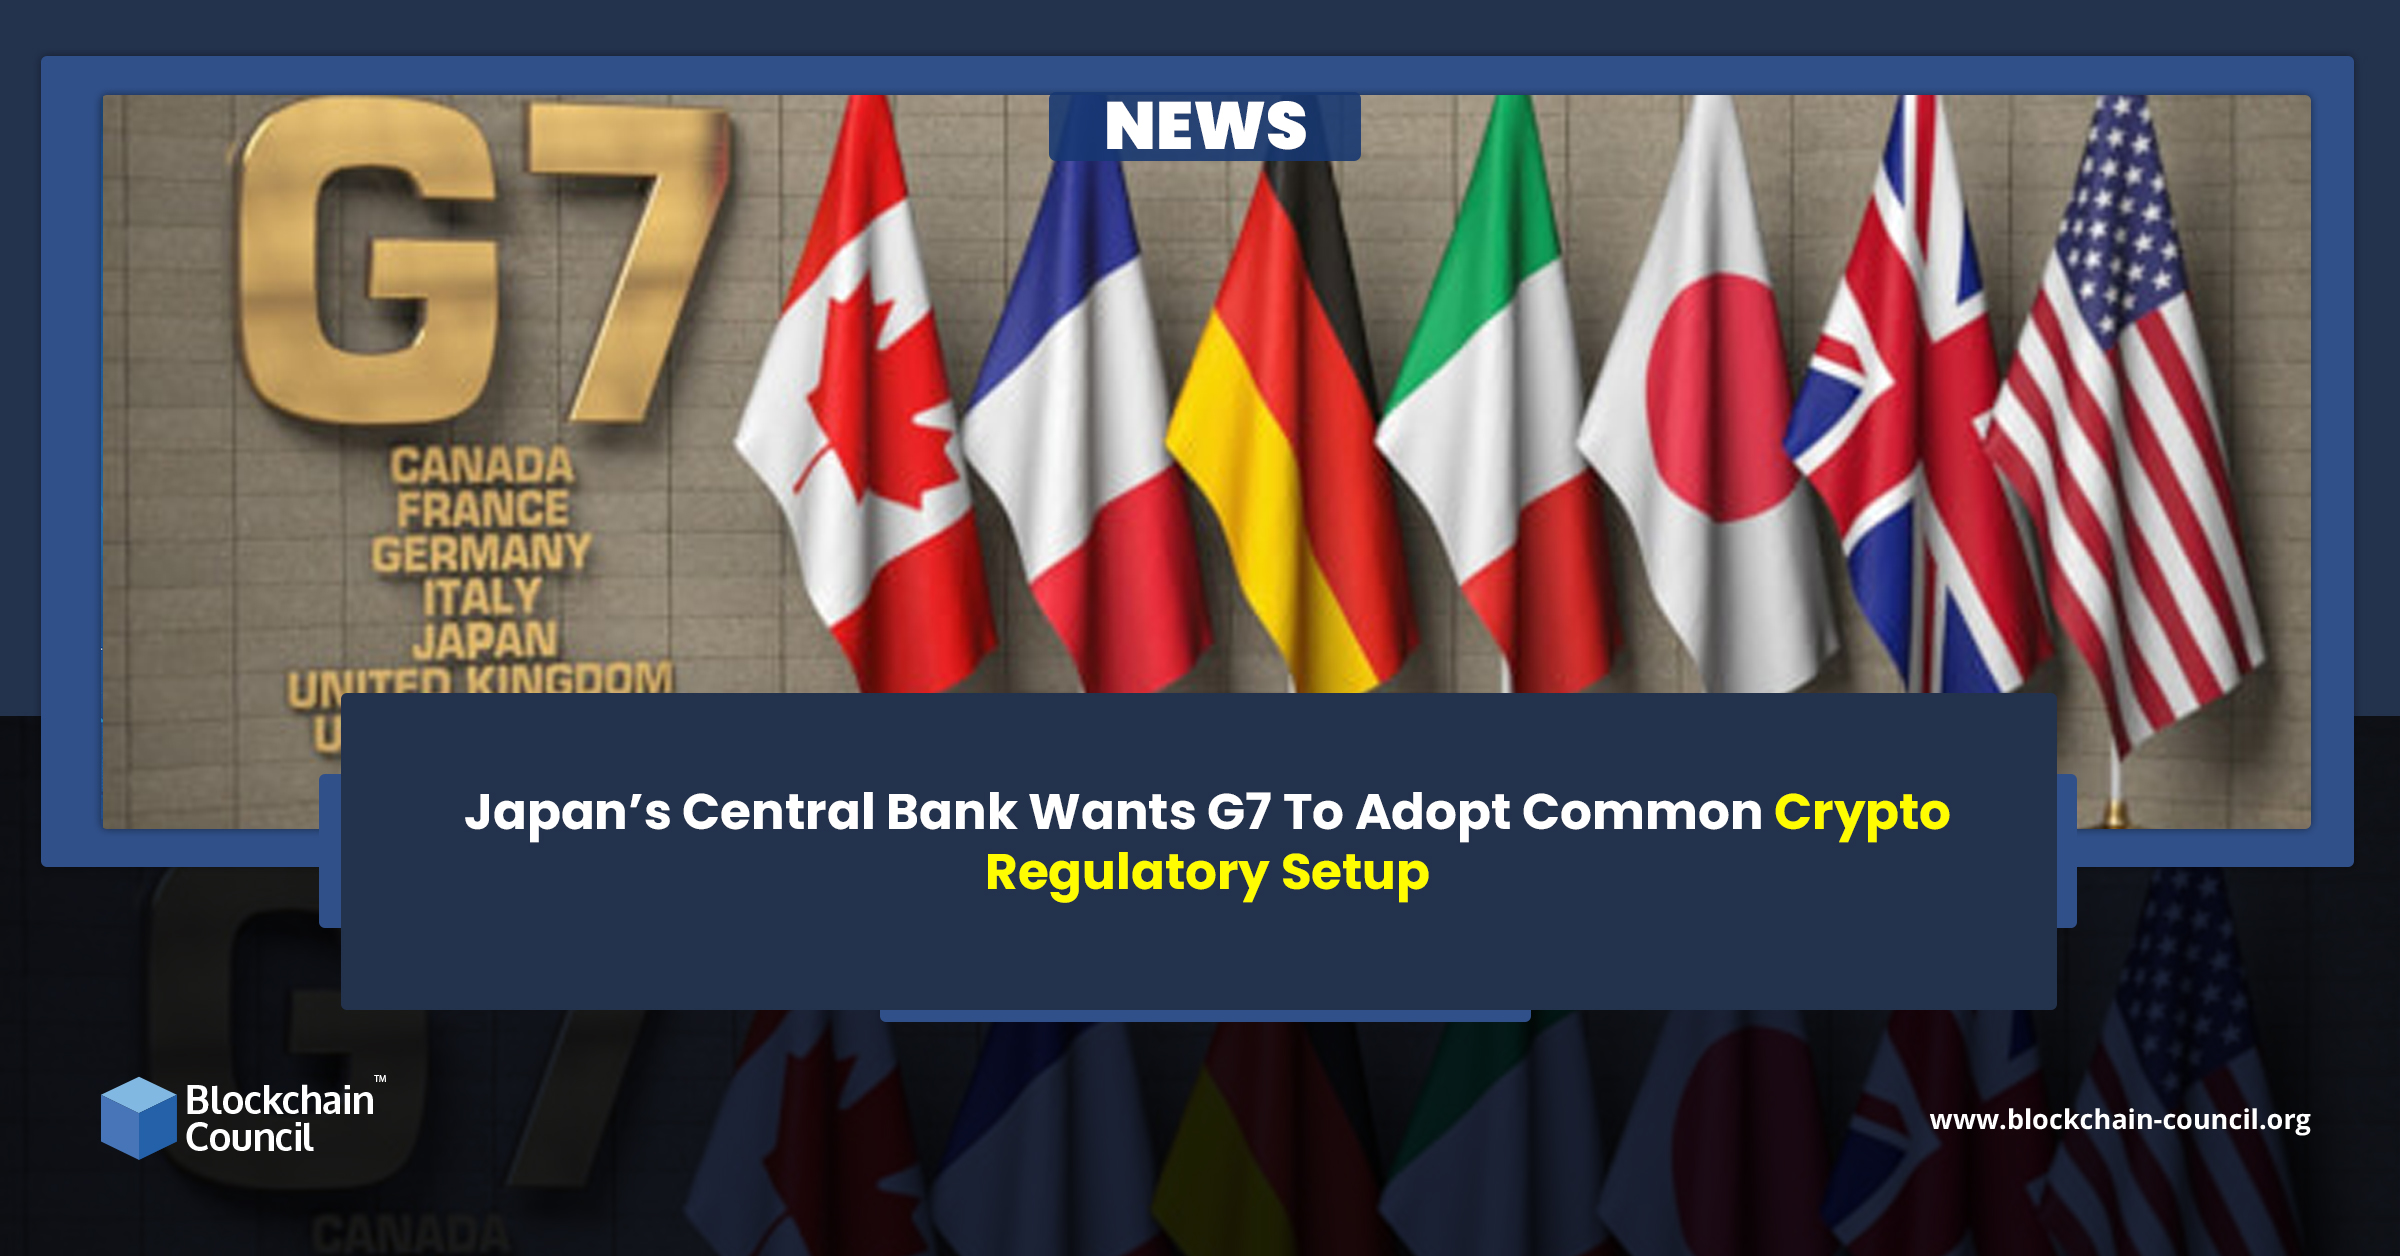 Japan’s Central Bank Wants G7 To Adopt Common Crypto Regulatory Setup